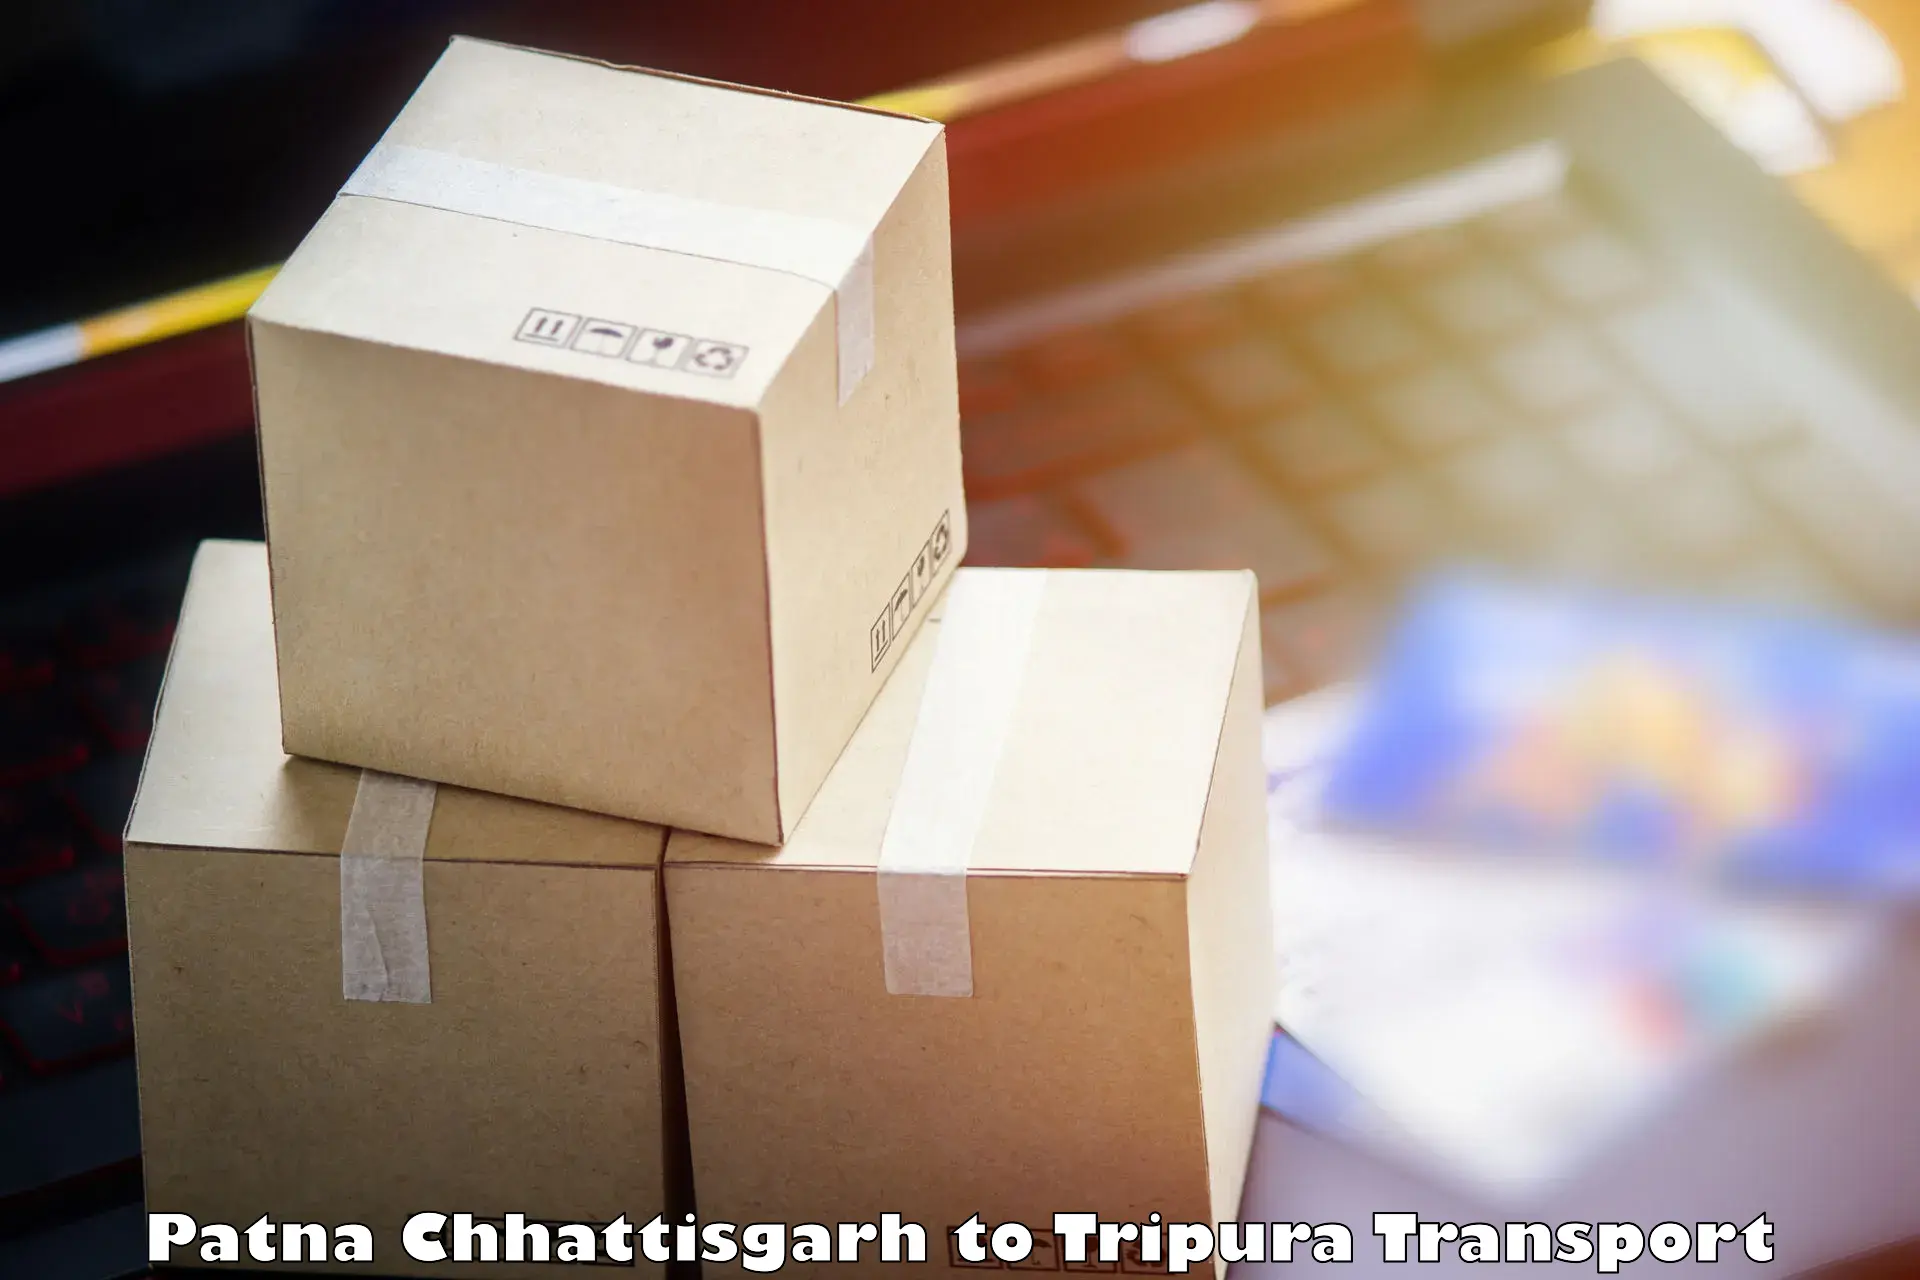 Furniture transport service Patna Chhattisgarh to Dharmanagar